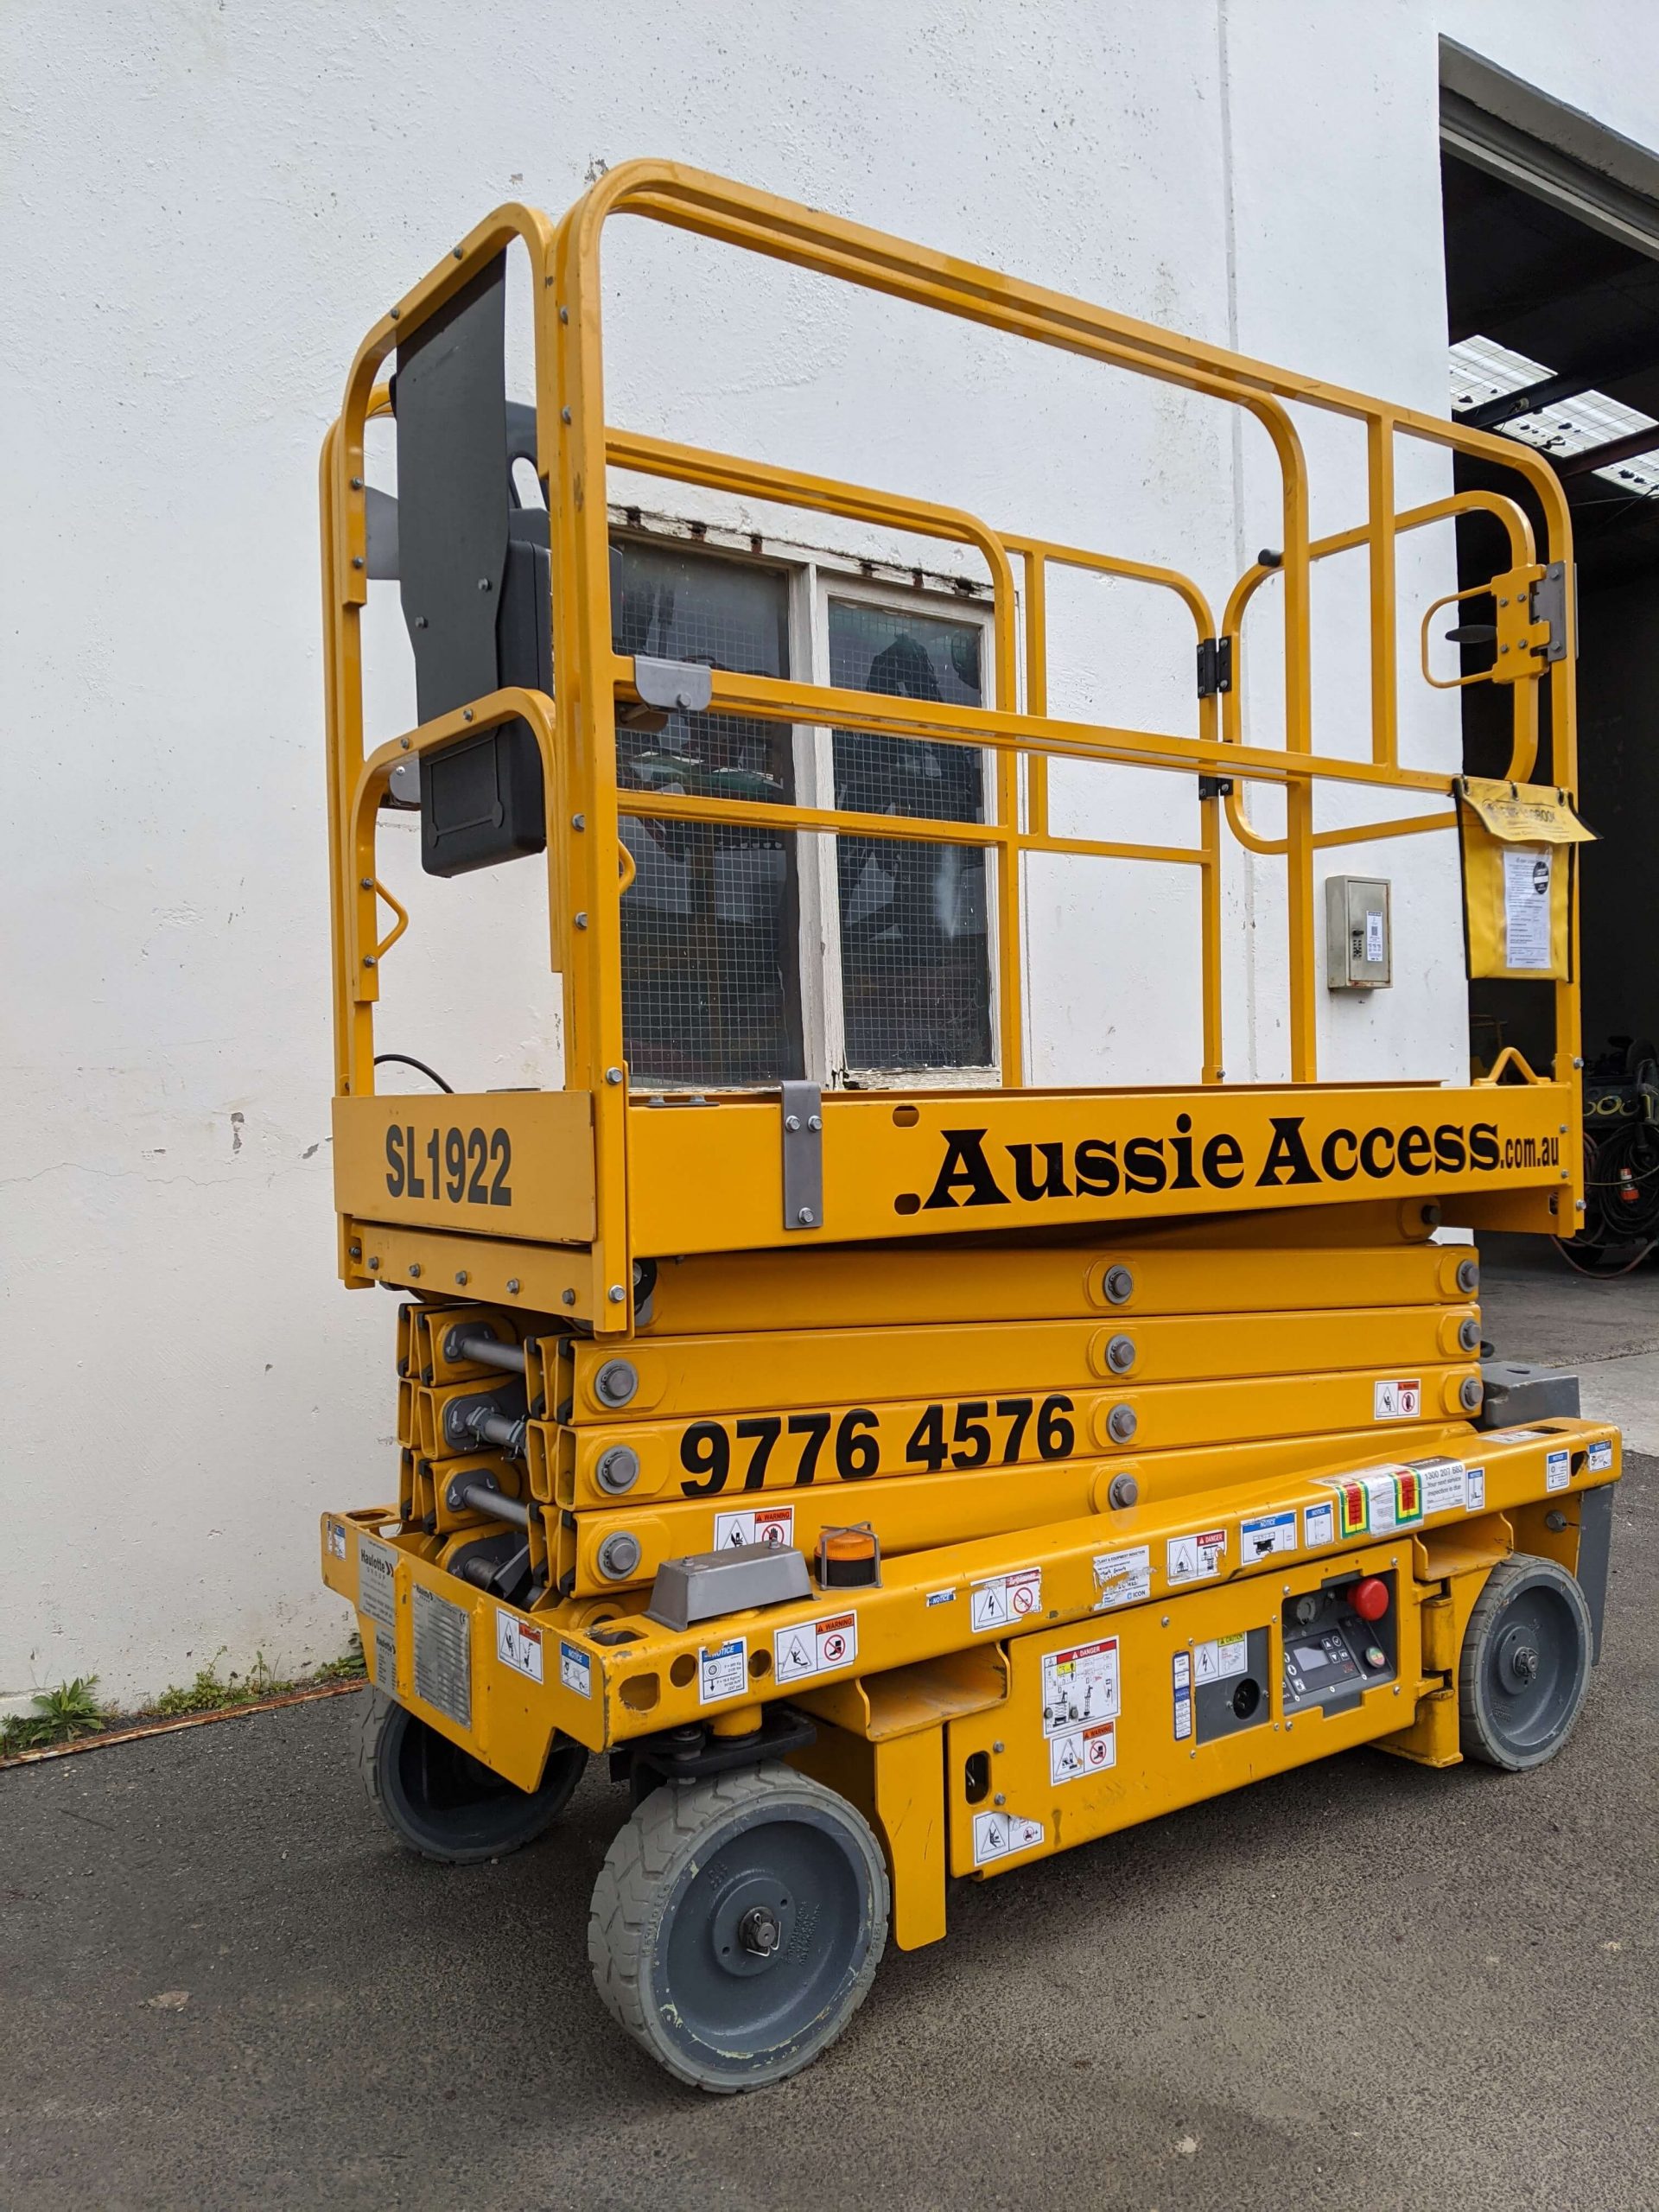 Access Equipment Hire Melbourne